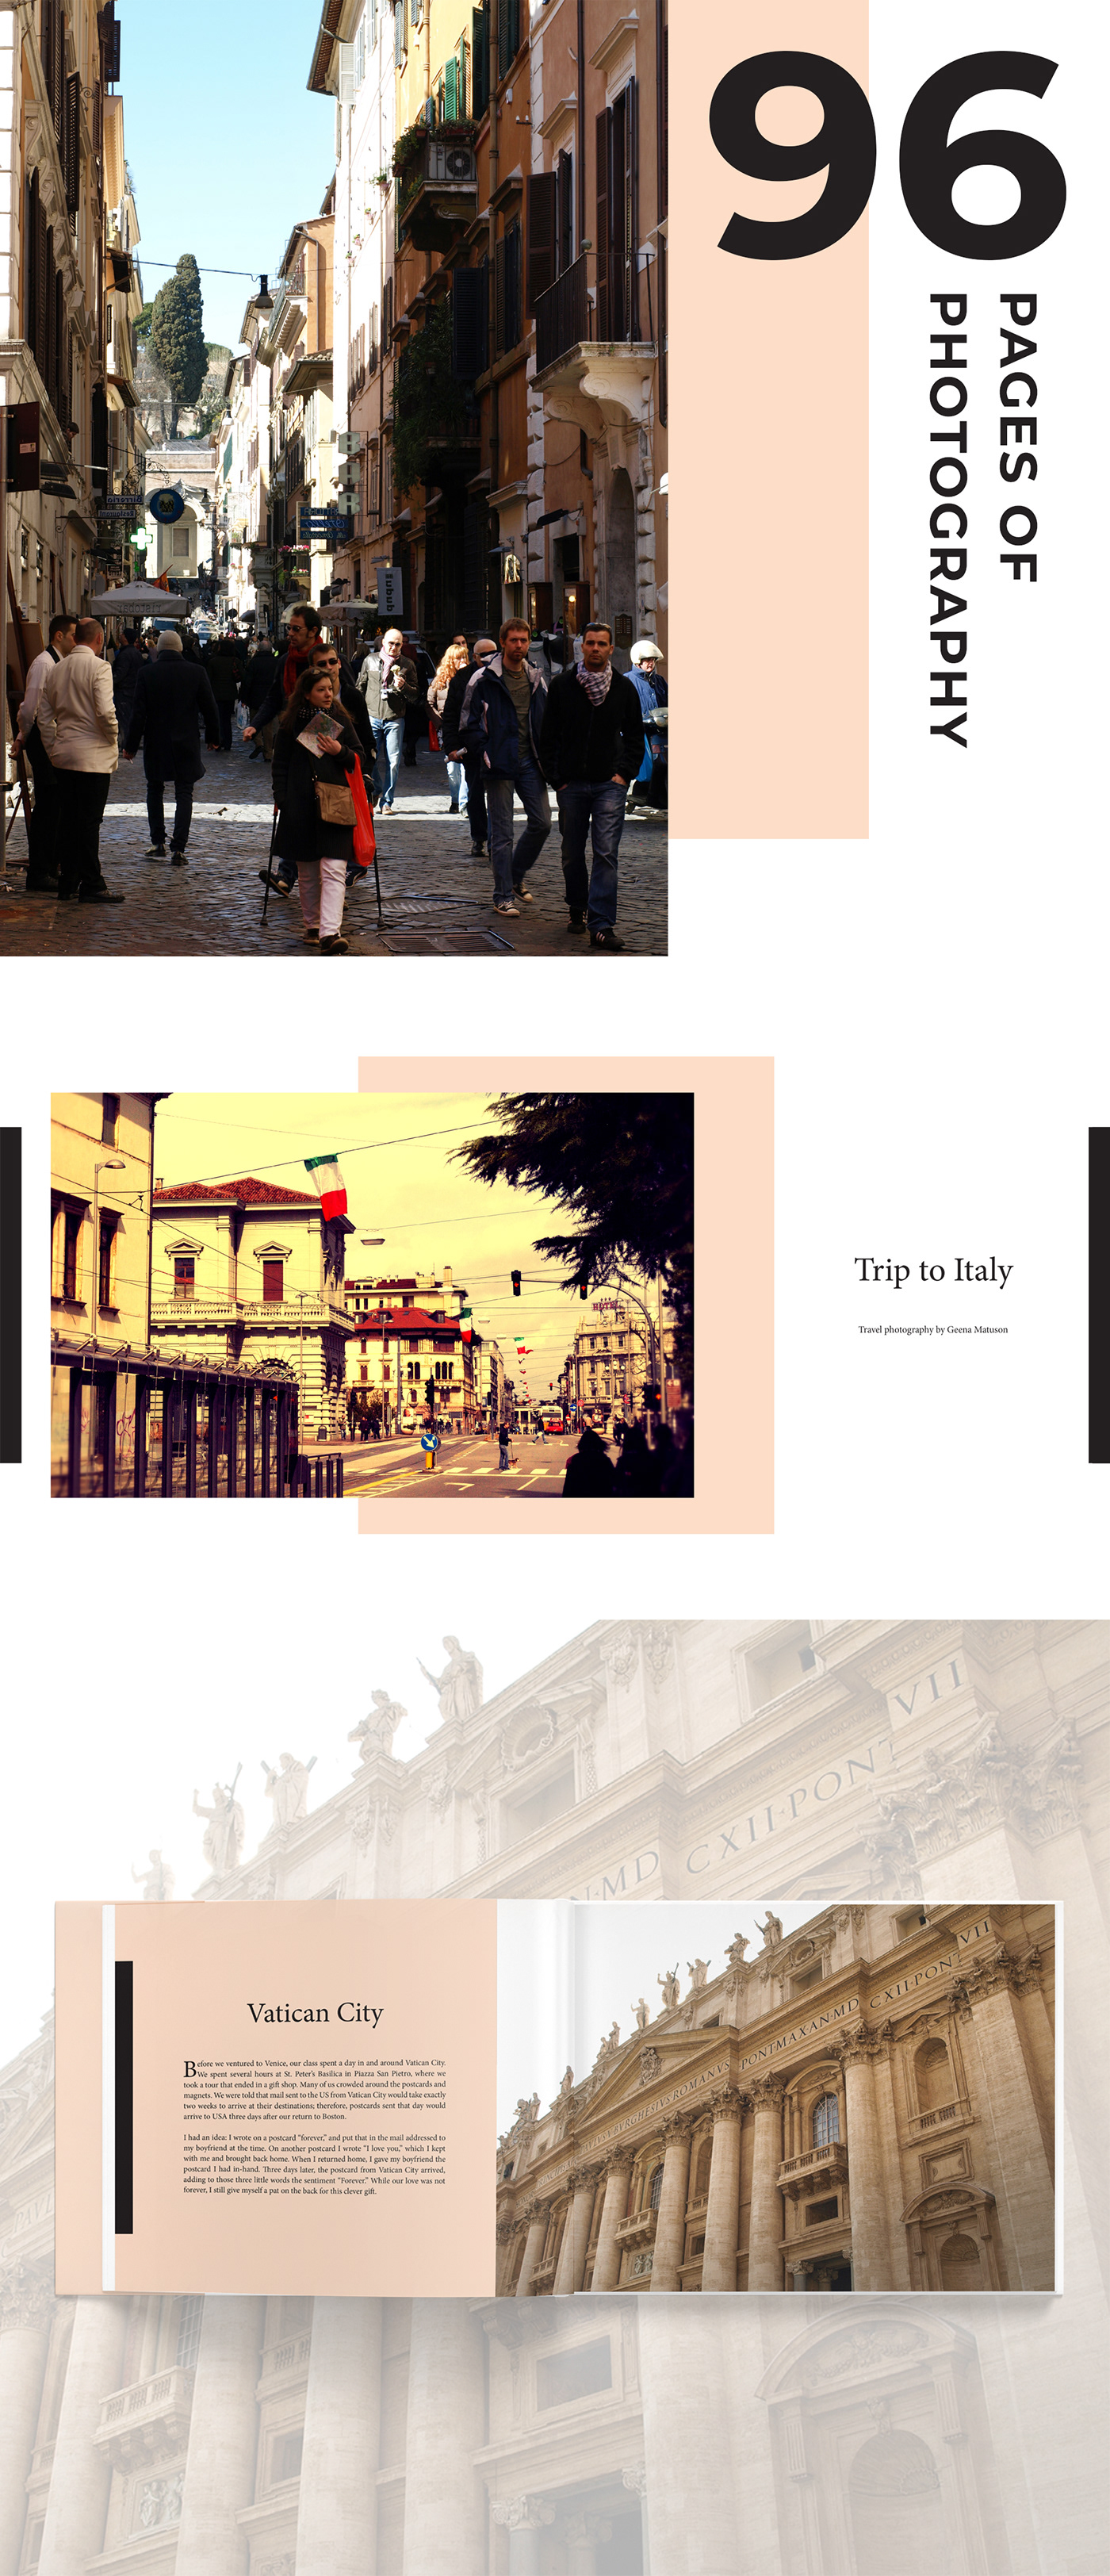 Italy Venice Rome Travel publishing   blurb books amazon author book design the girl mirage geena matuson